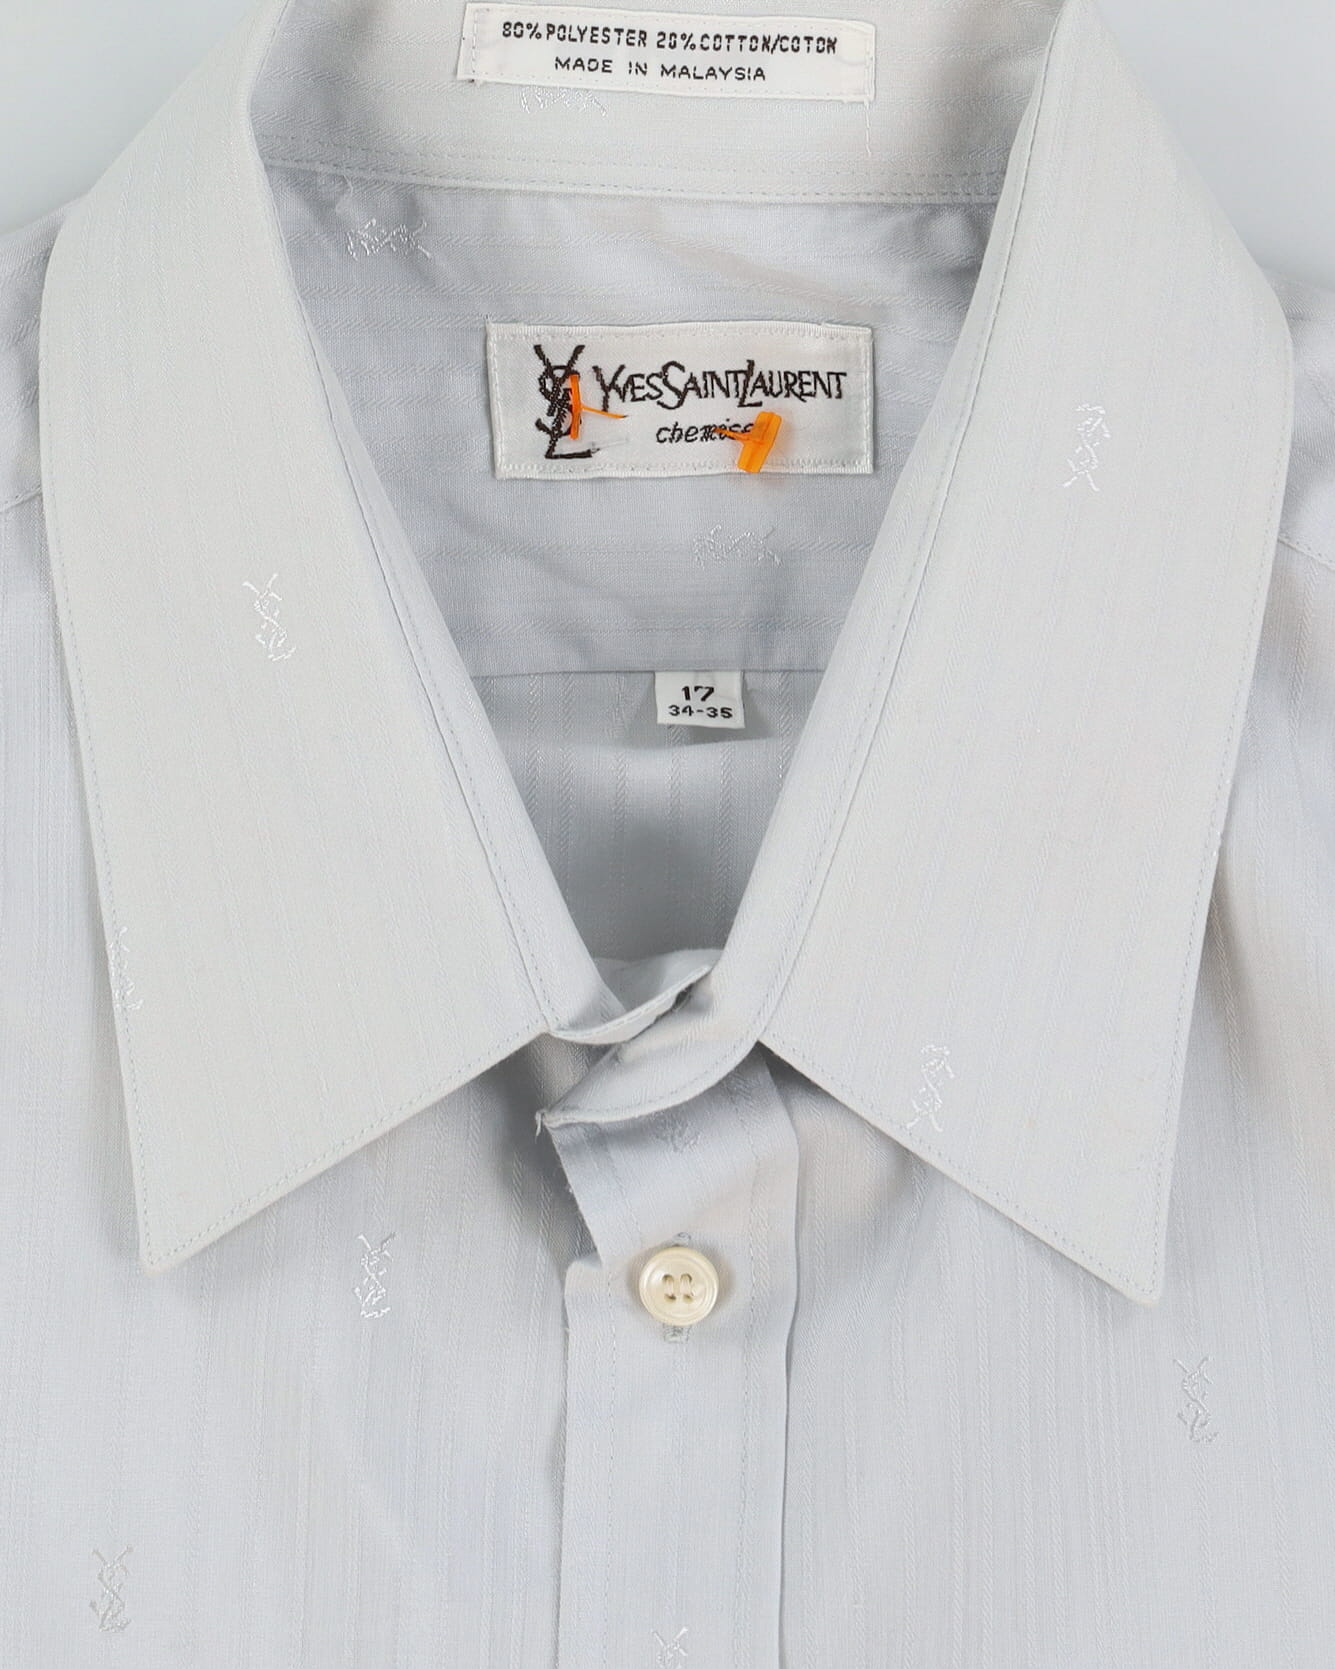 Yves Saint Laurent All Over Pattern Long-Sleeve Shirt - XL